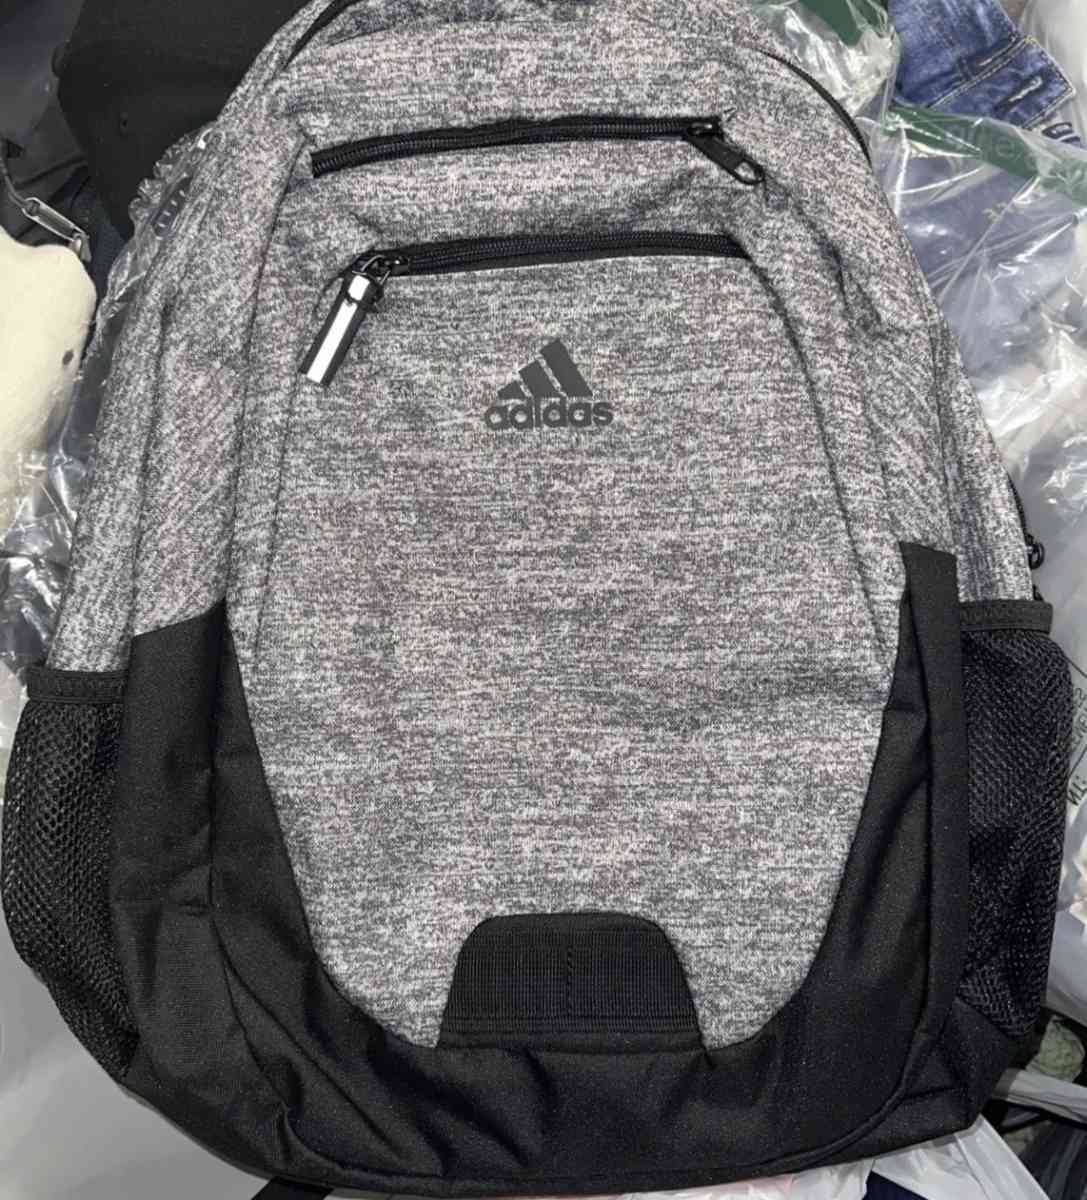 NWOT Adidas backpack